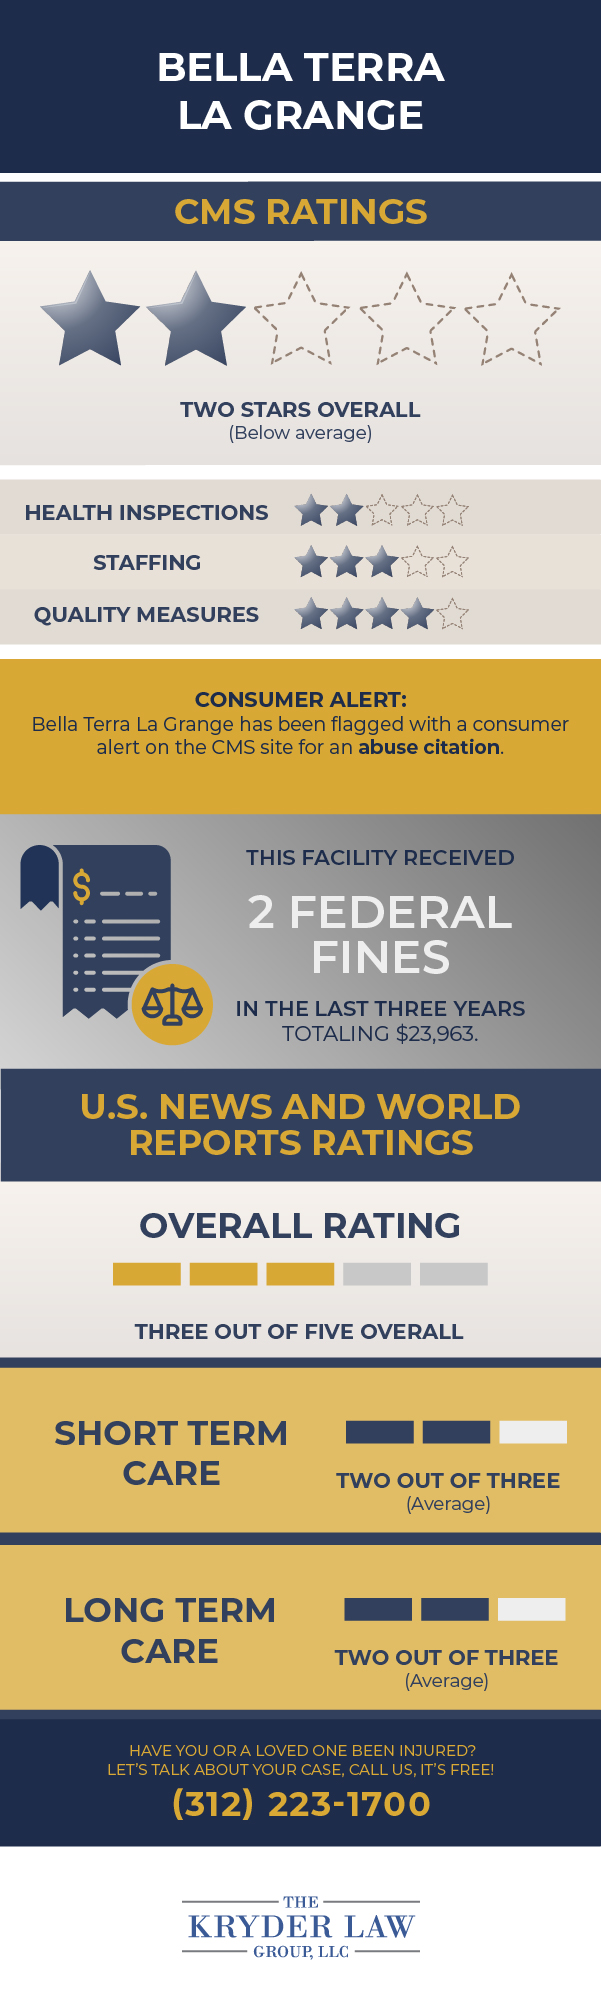 Bella Terra La Grange CMS Ratings and U.S. News and World Report Ratings